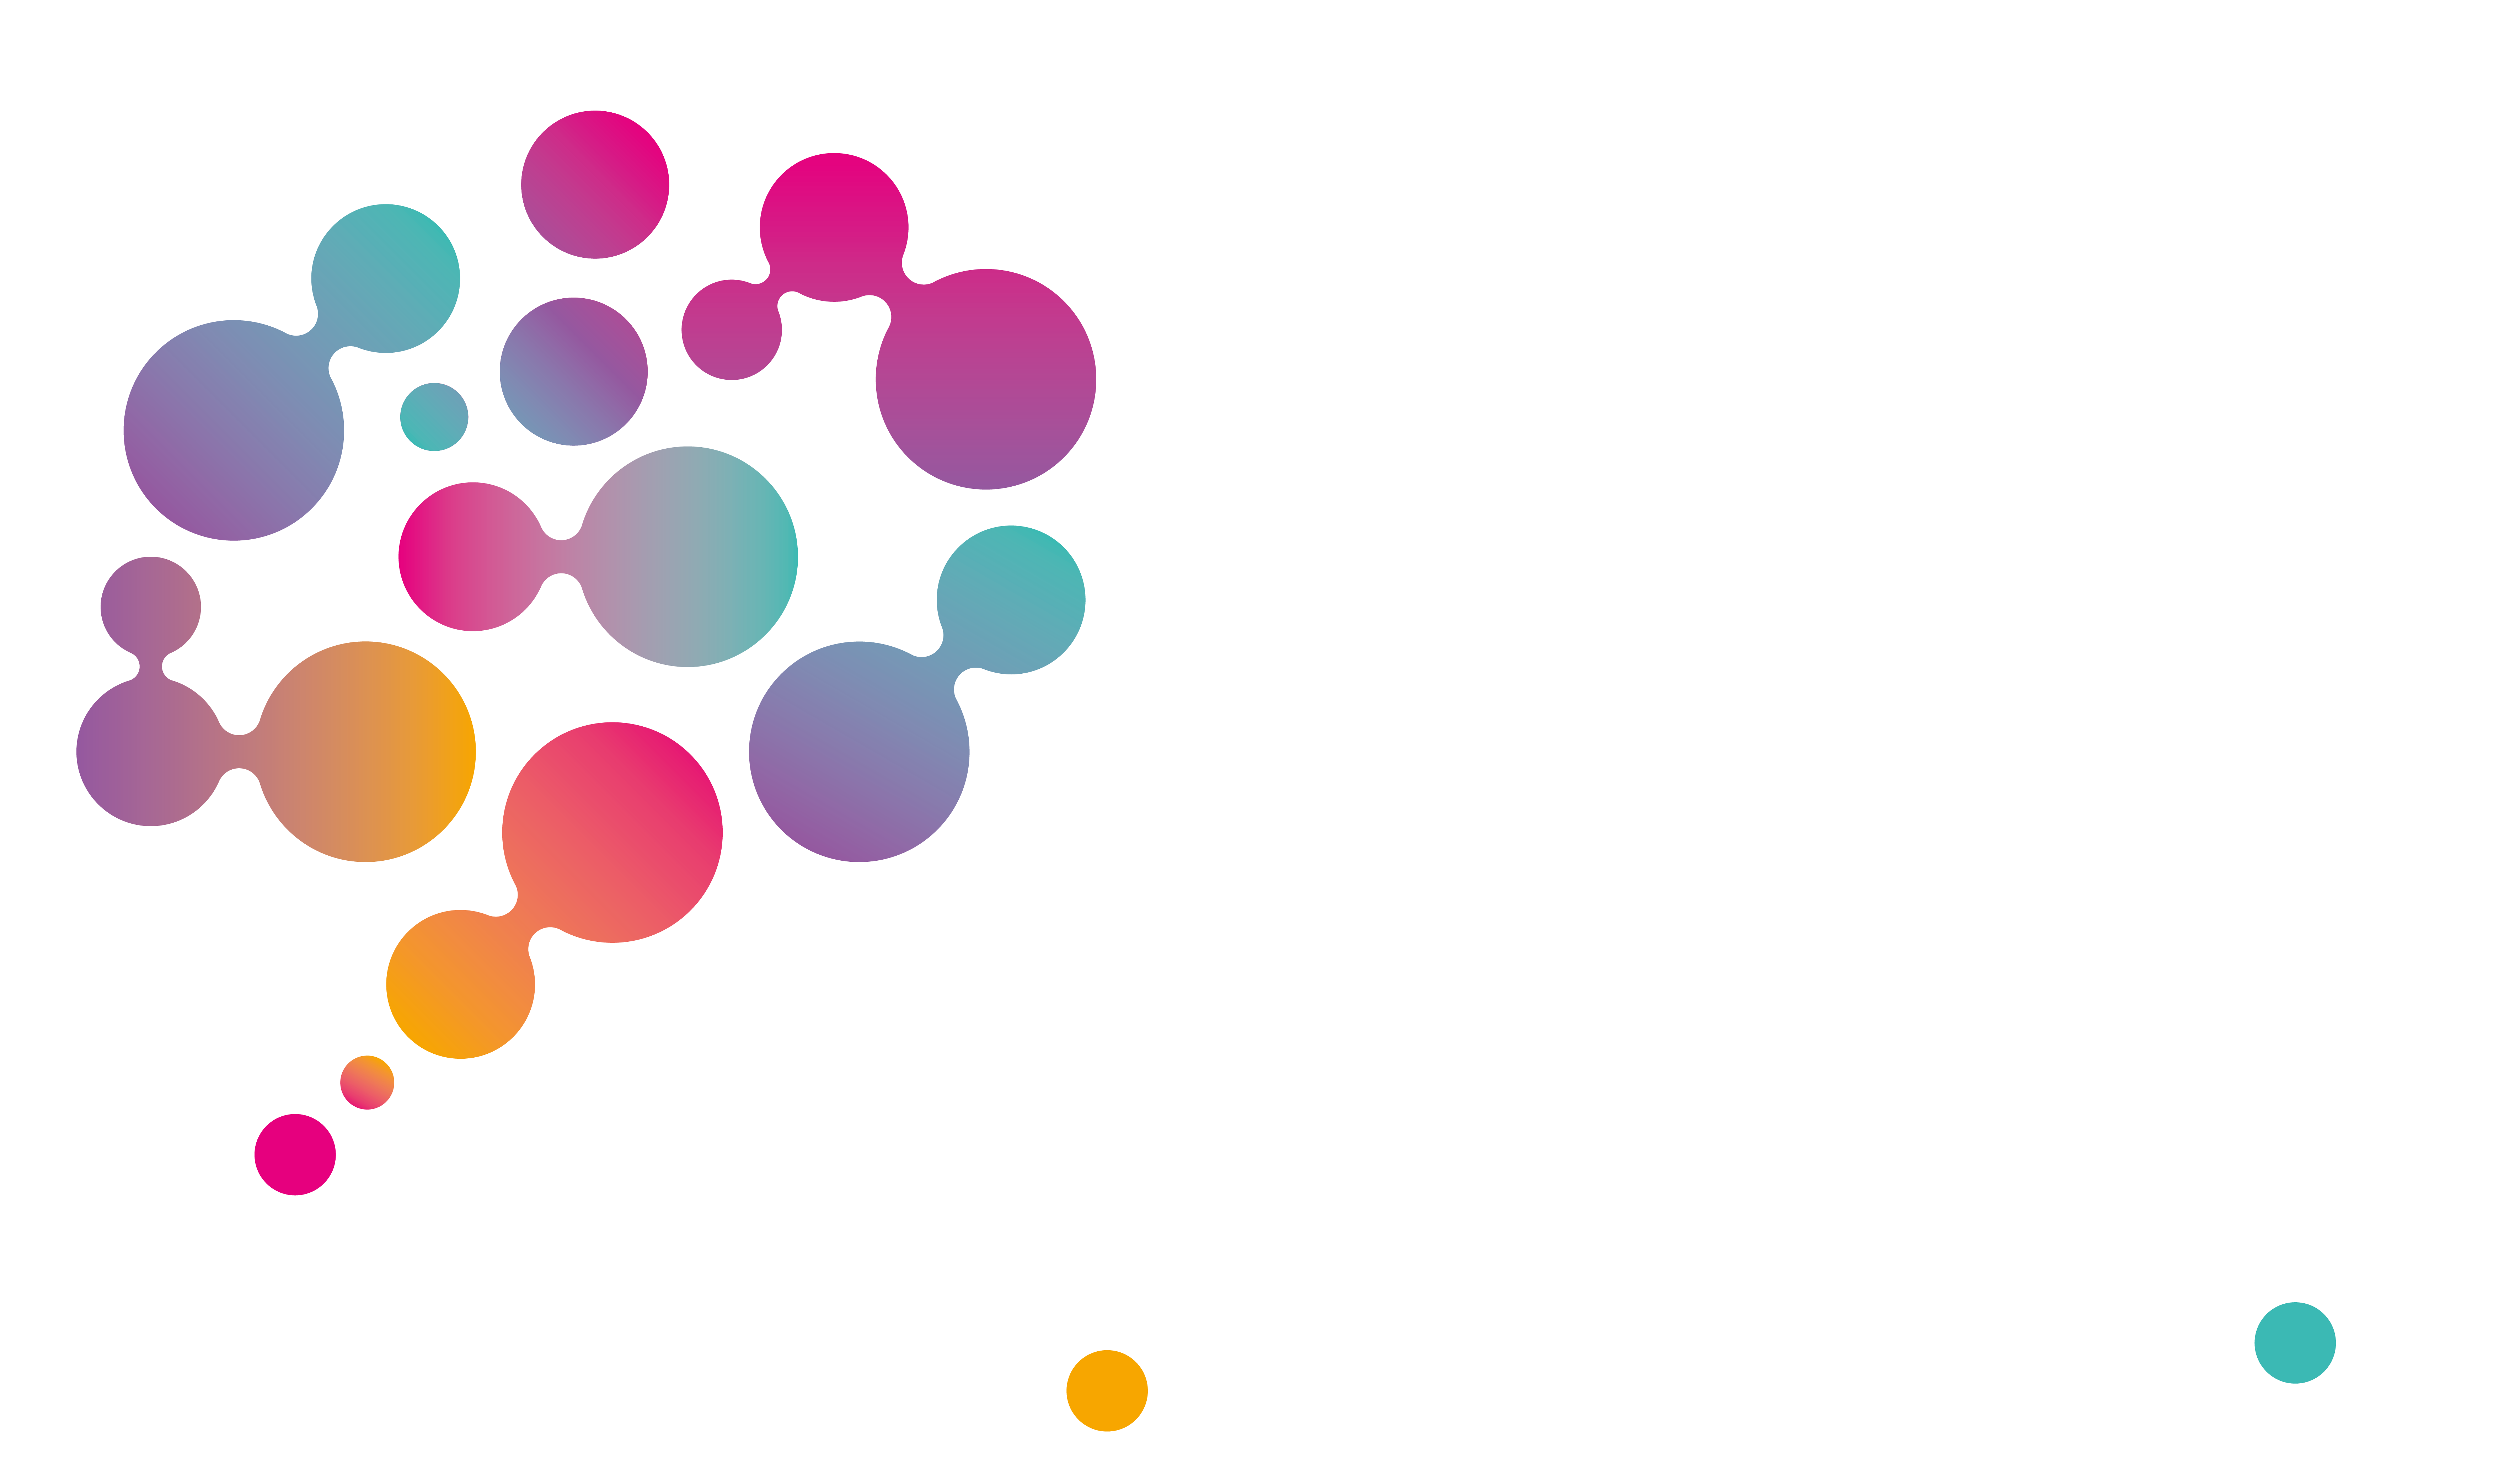 Logopsycom